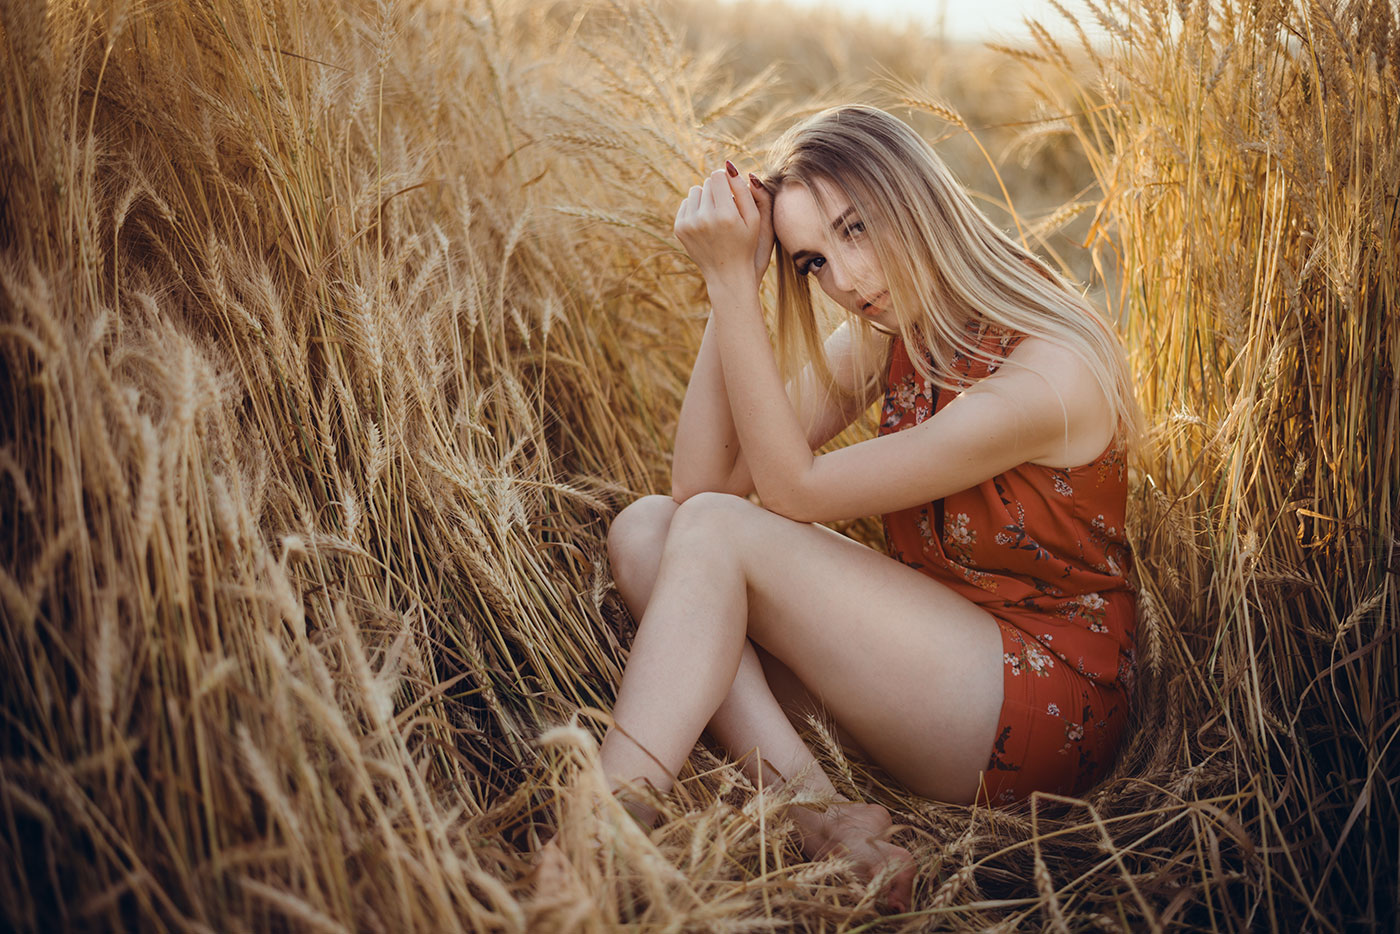 Oleg Raevskiy Women Blonde Field Grain Dress Legs Painted Nails Warm Summer 1400x934